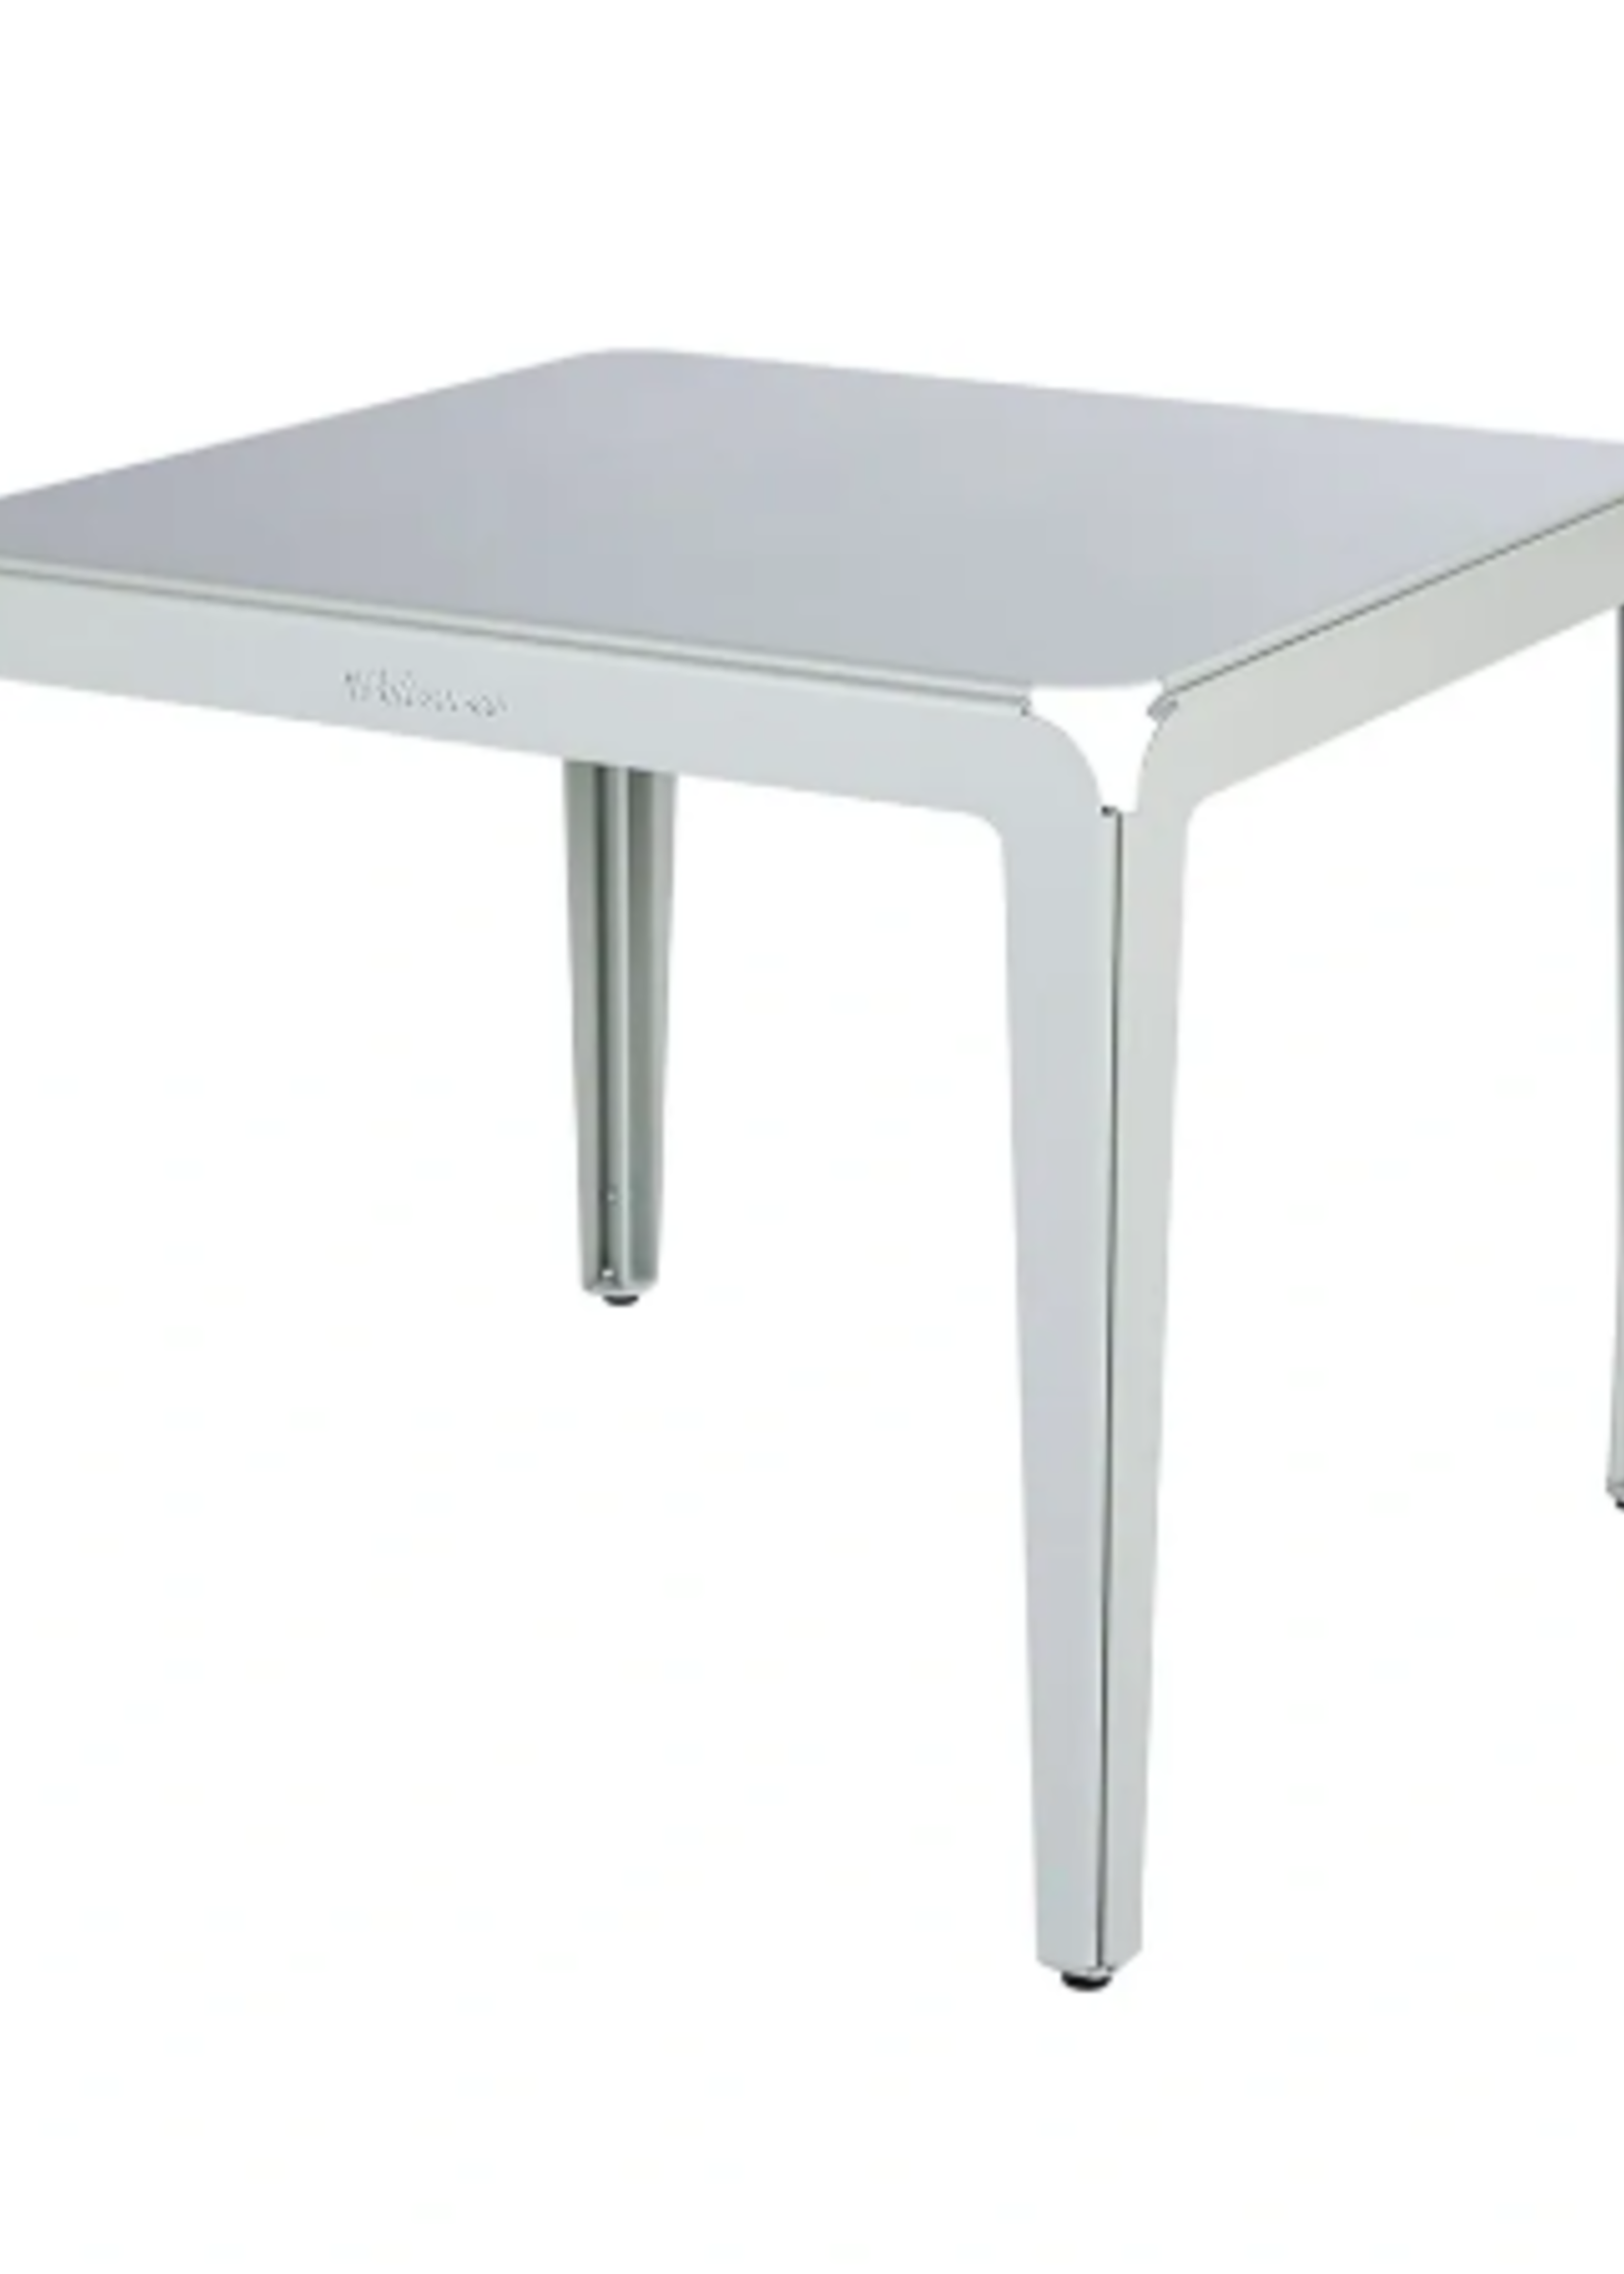 Weltevree Weltevree - Bended Table 90 - Gris agate - Table de jardin légère en aluminium